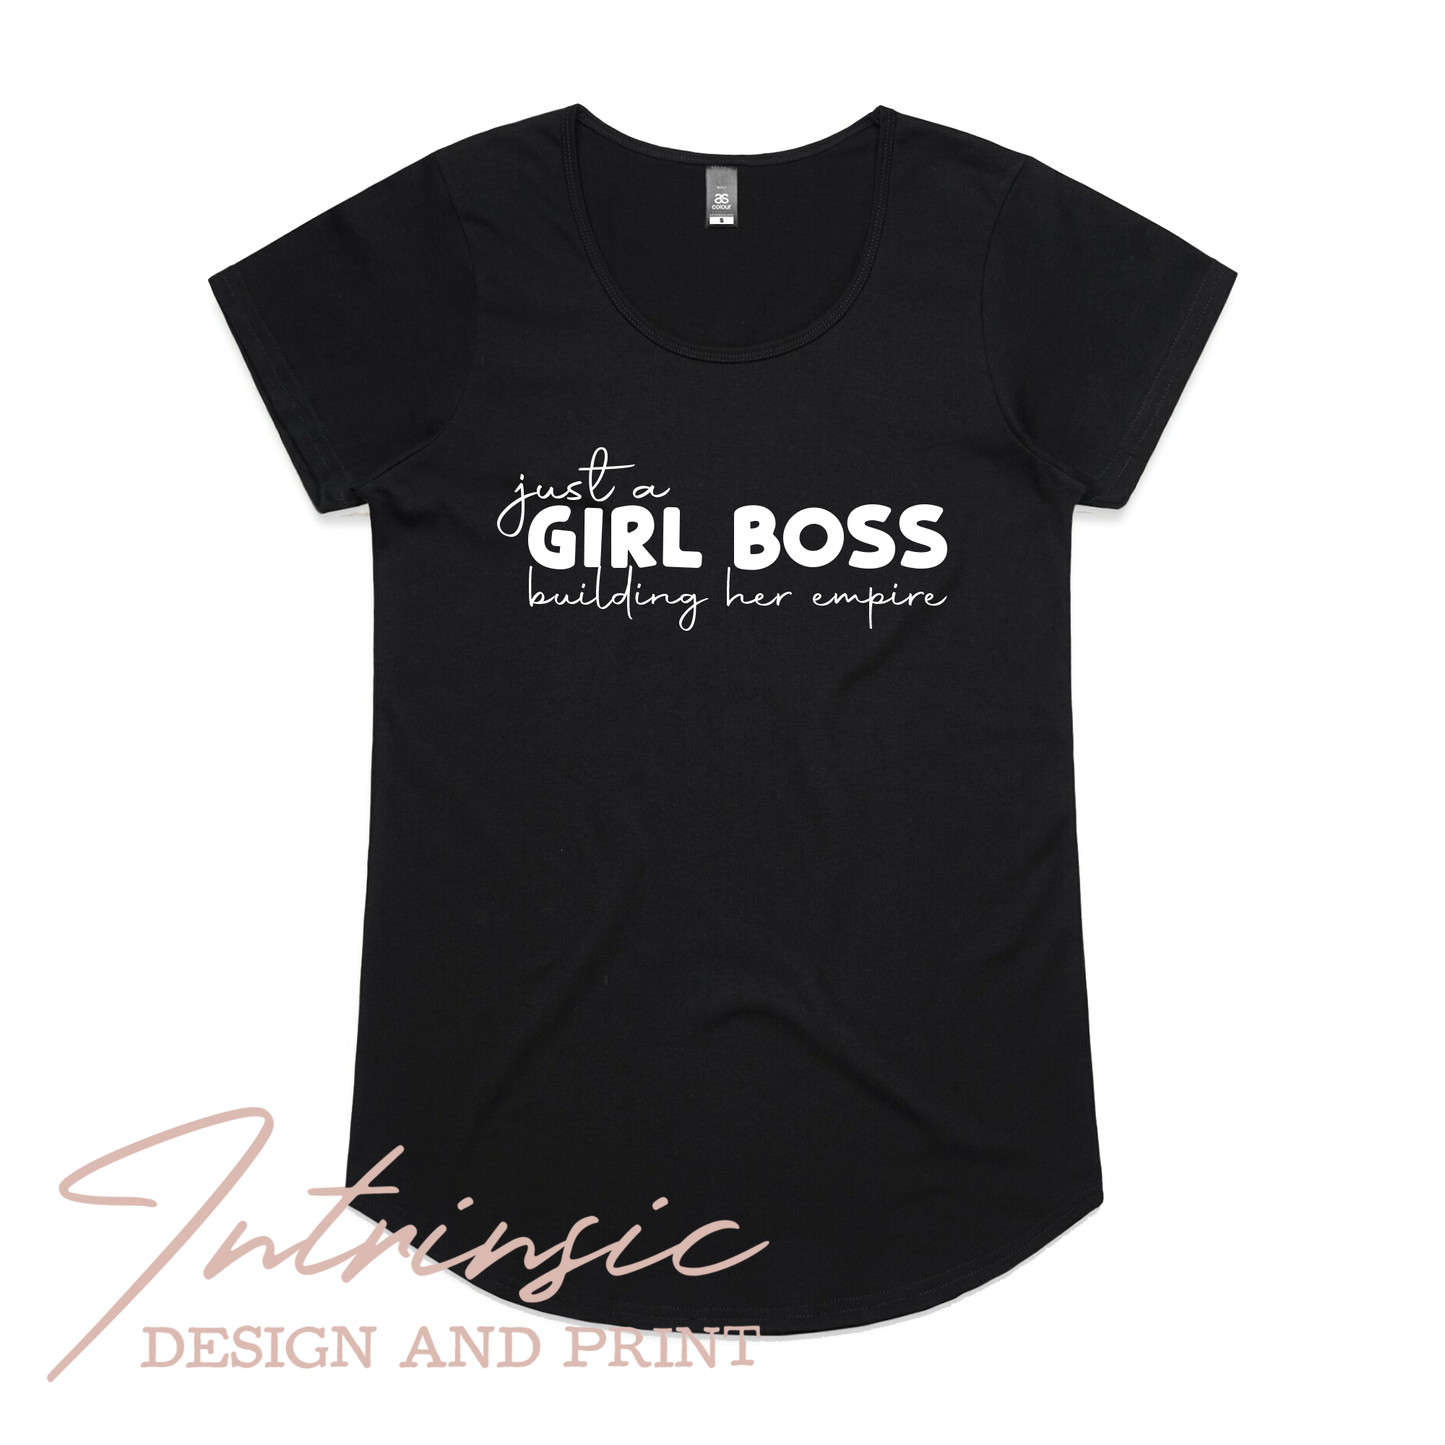 Girl boss empire